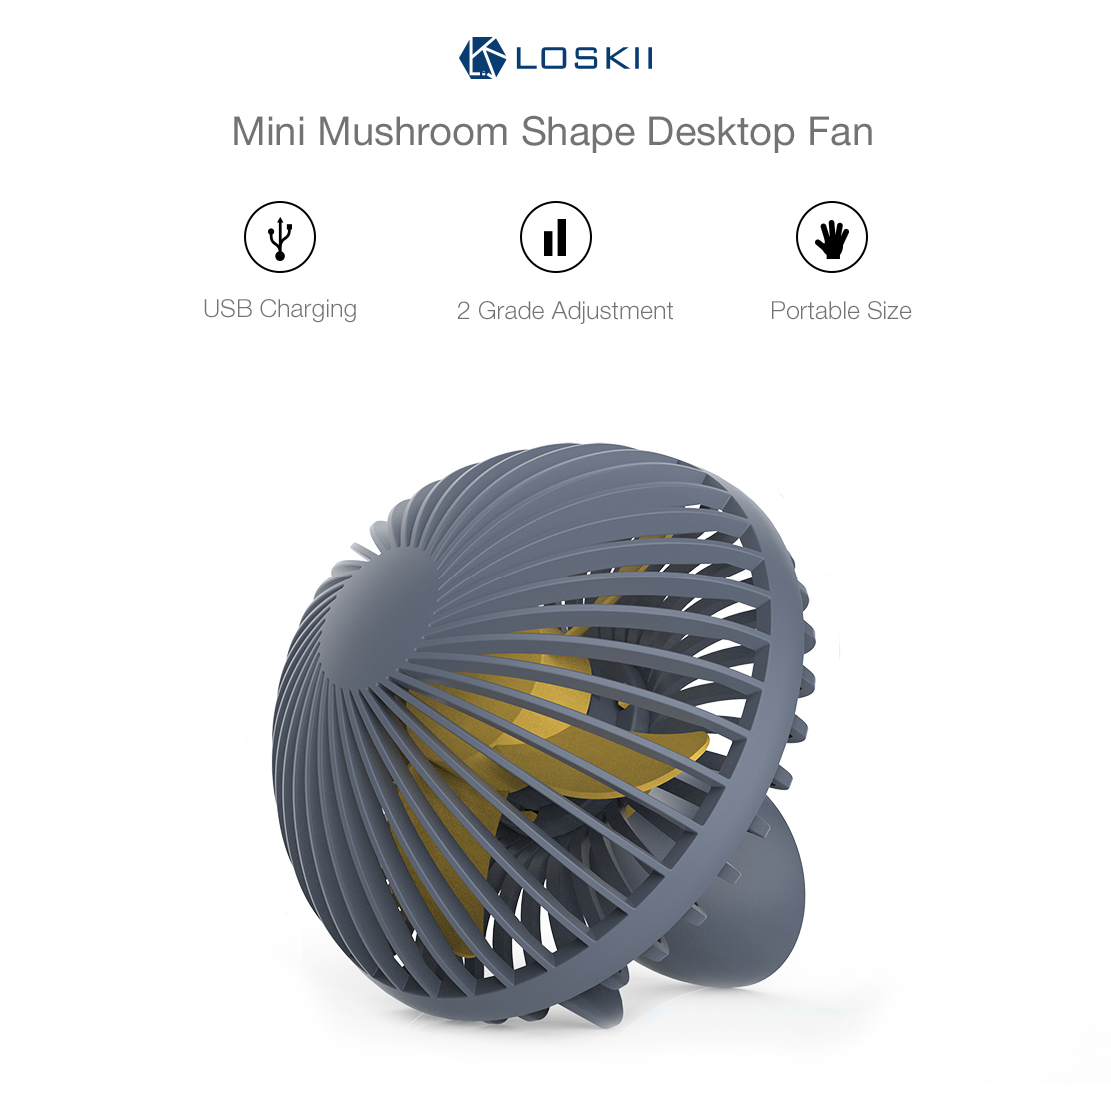 Loskii HF-200 Portable Mini Electronic Desktop Mushroom Shape Summer Cooling Fan 2 Grade Adjustment USB Charging Fan 57